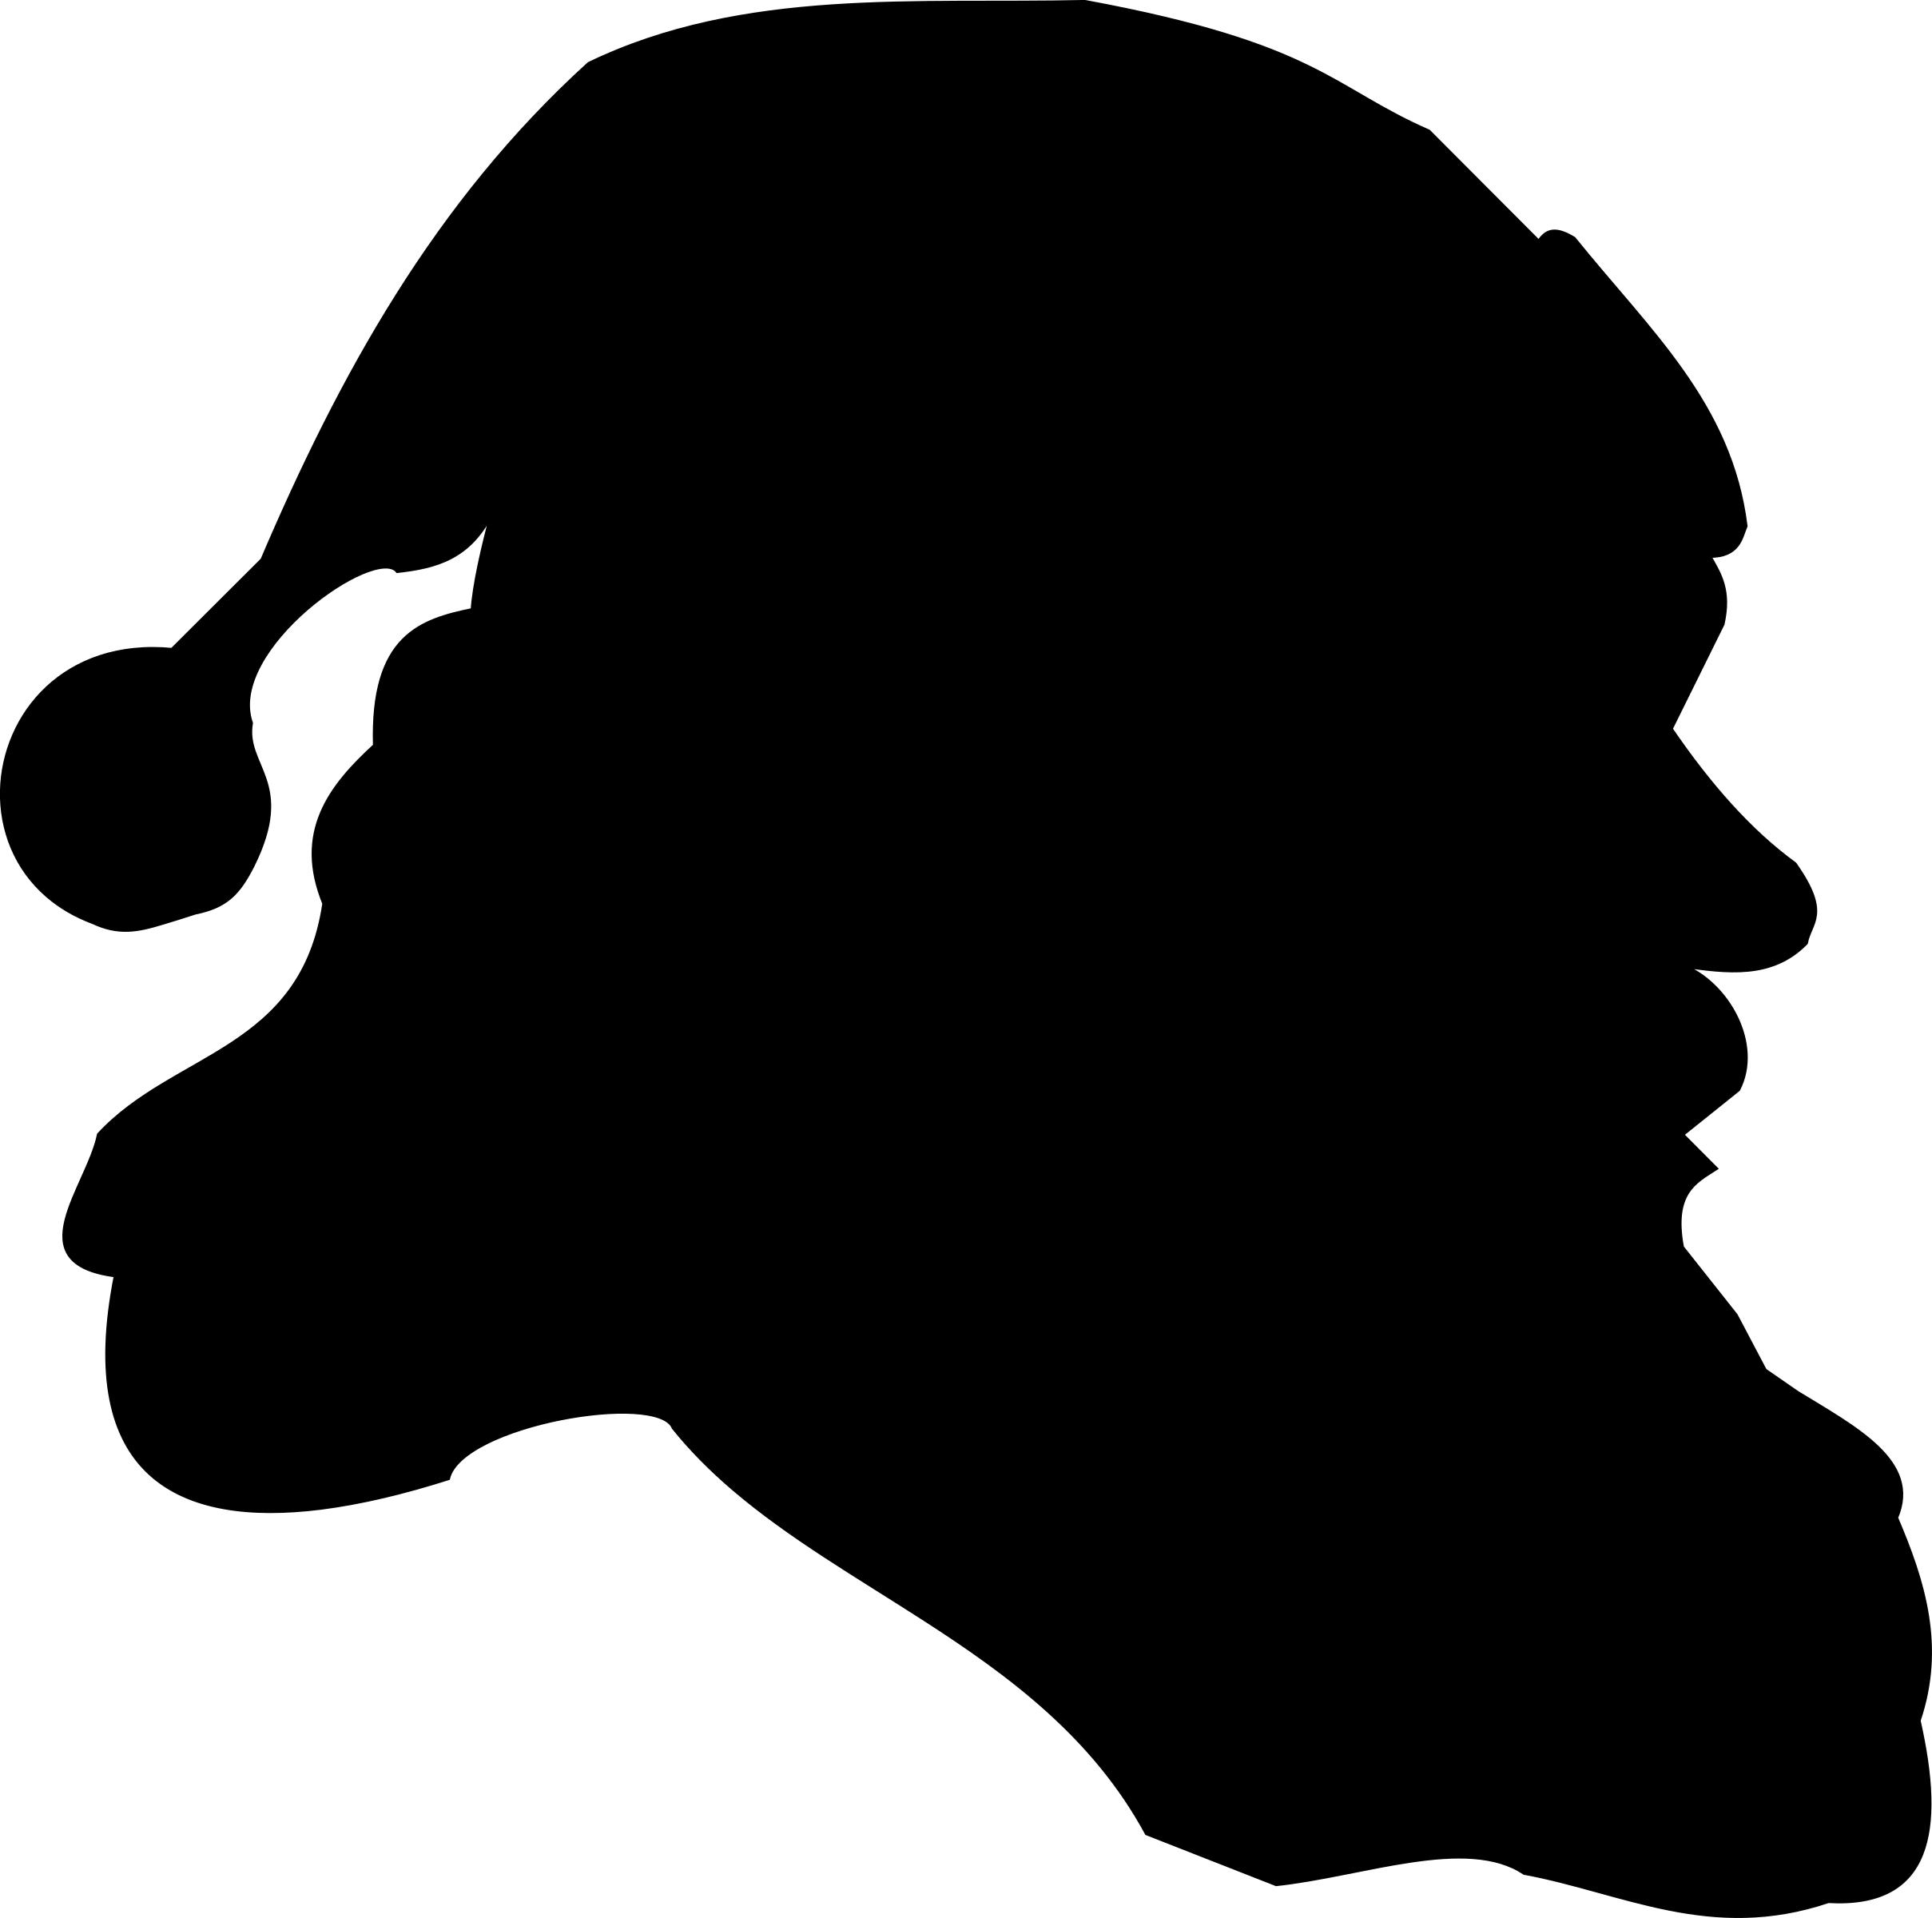 Santa Claus silhouette profile dingbat PNG icons